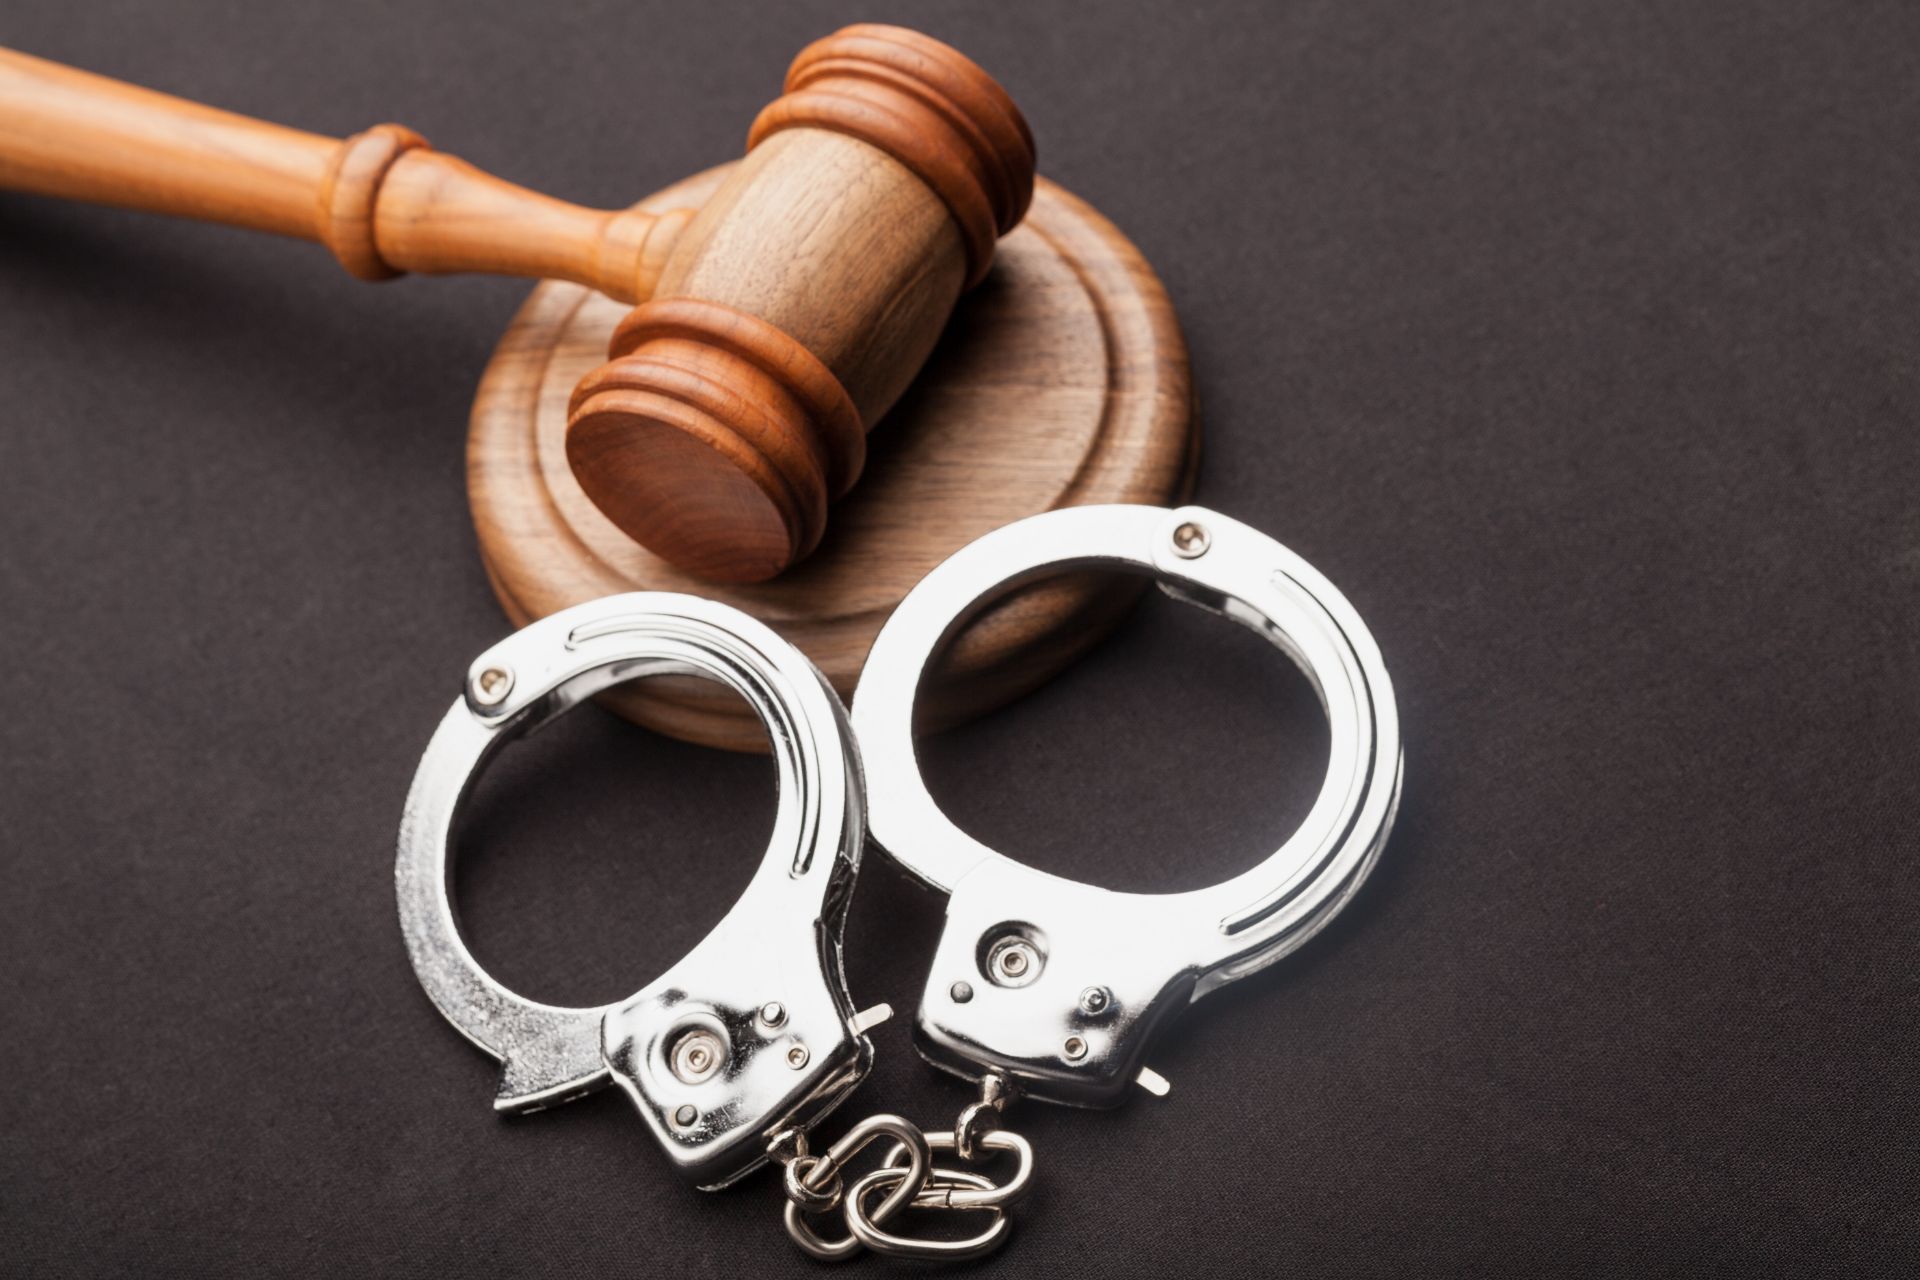 handcuffs and judge gavel